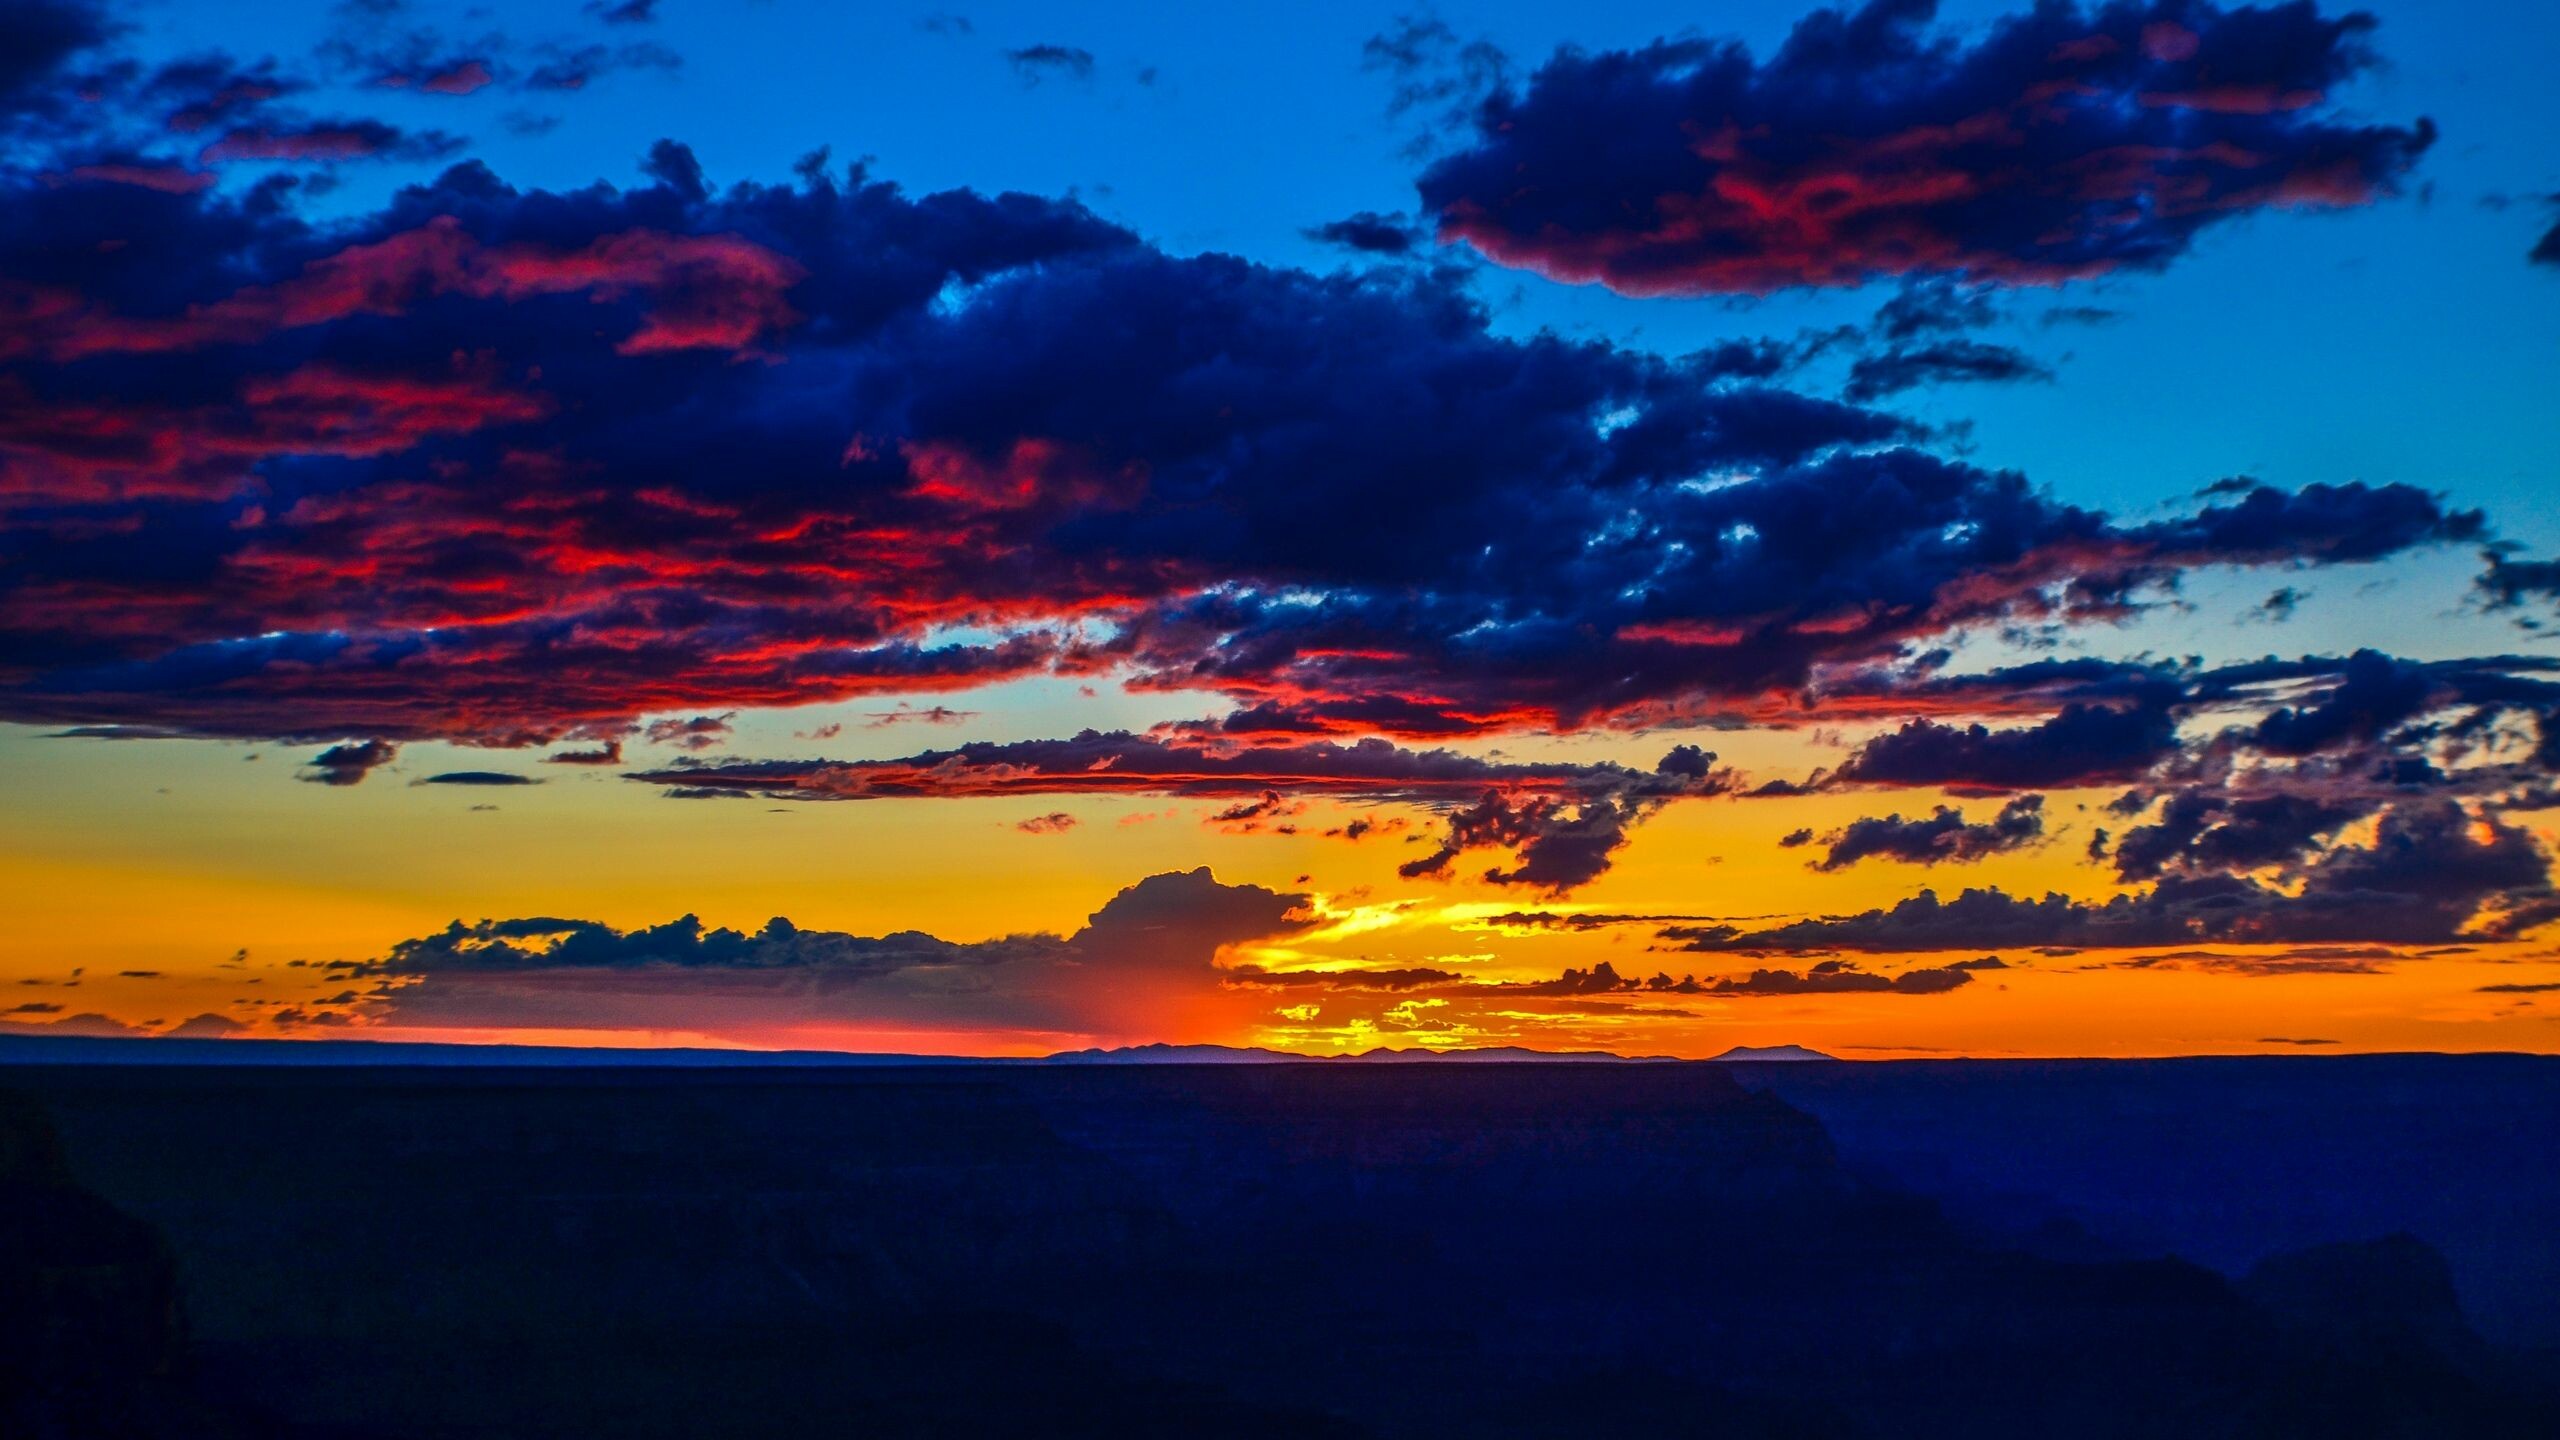 Sunset: The evening twilight, Dark clouds blocking sunlight. 2560x1440 HD Wallpaper.